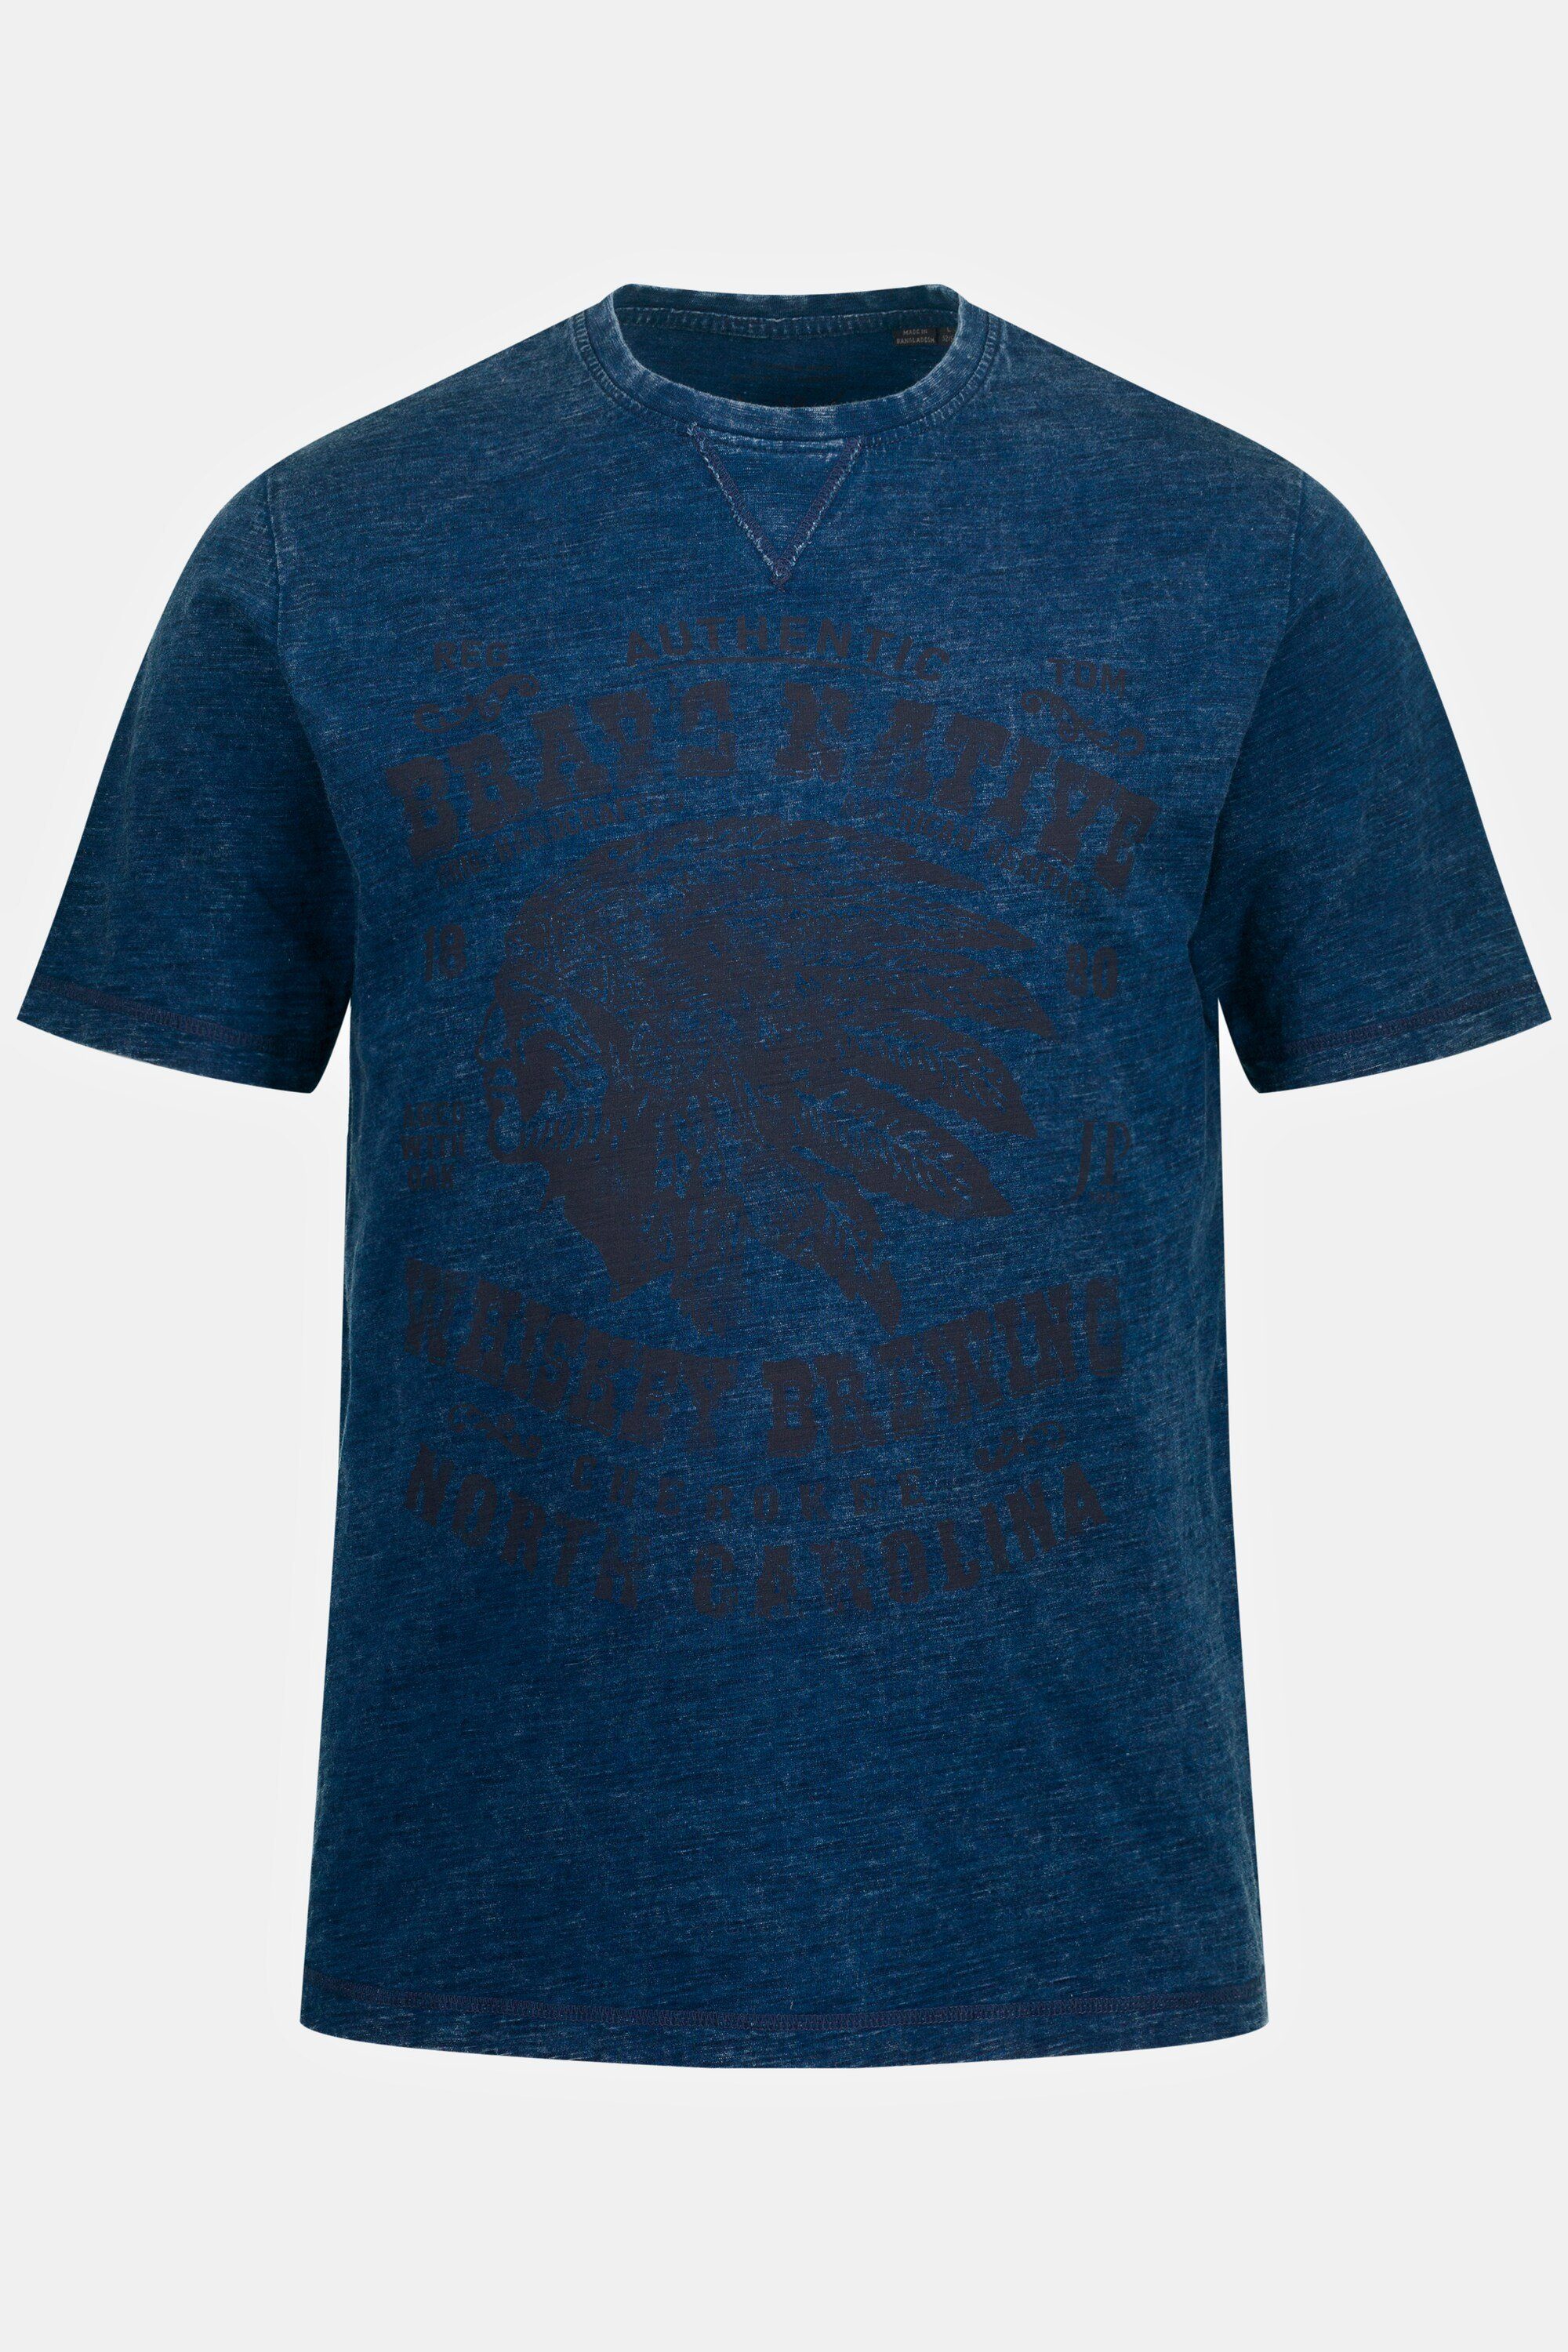 T-Shirt Print T-Shirt Indigo-Färbung JP1880 Rundhals Halbarm